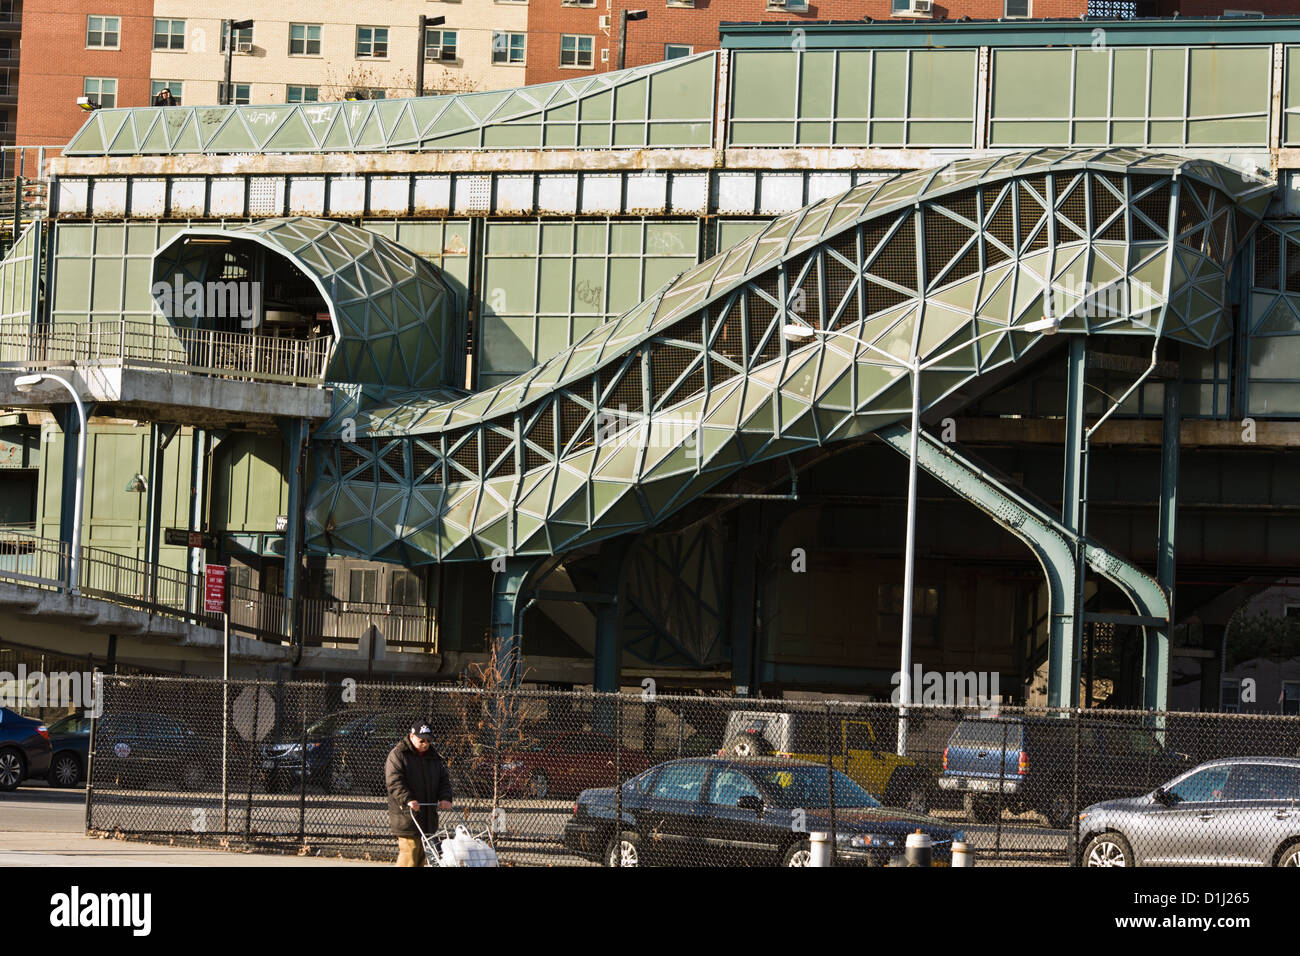 Artist Vito Acconi created 'Wavewall', West 8th St Subway Station at Coney Island, Brooklyn, New York Stock Photo